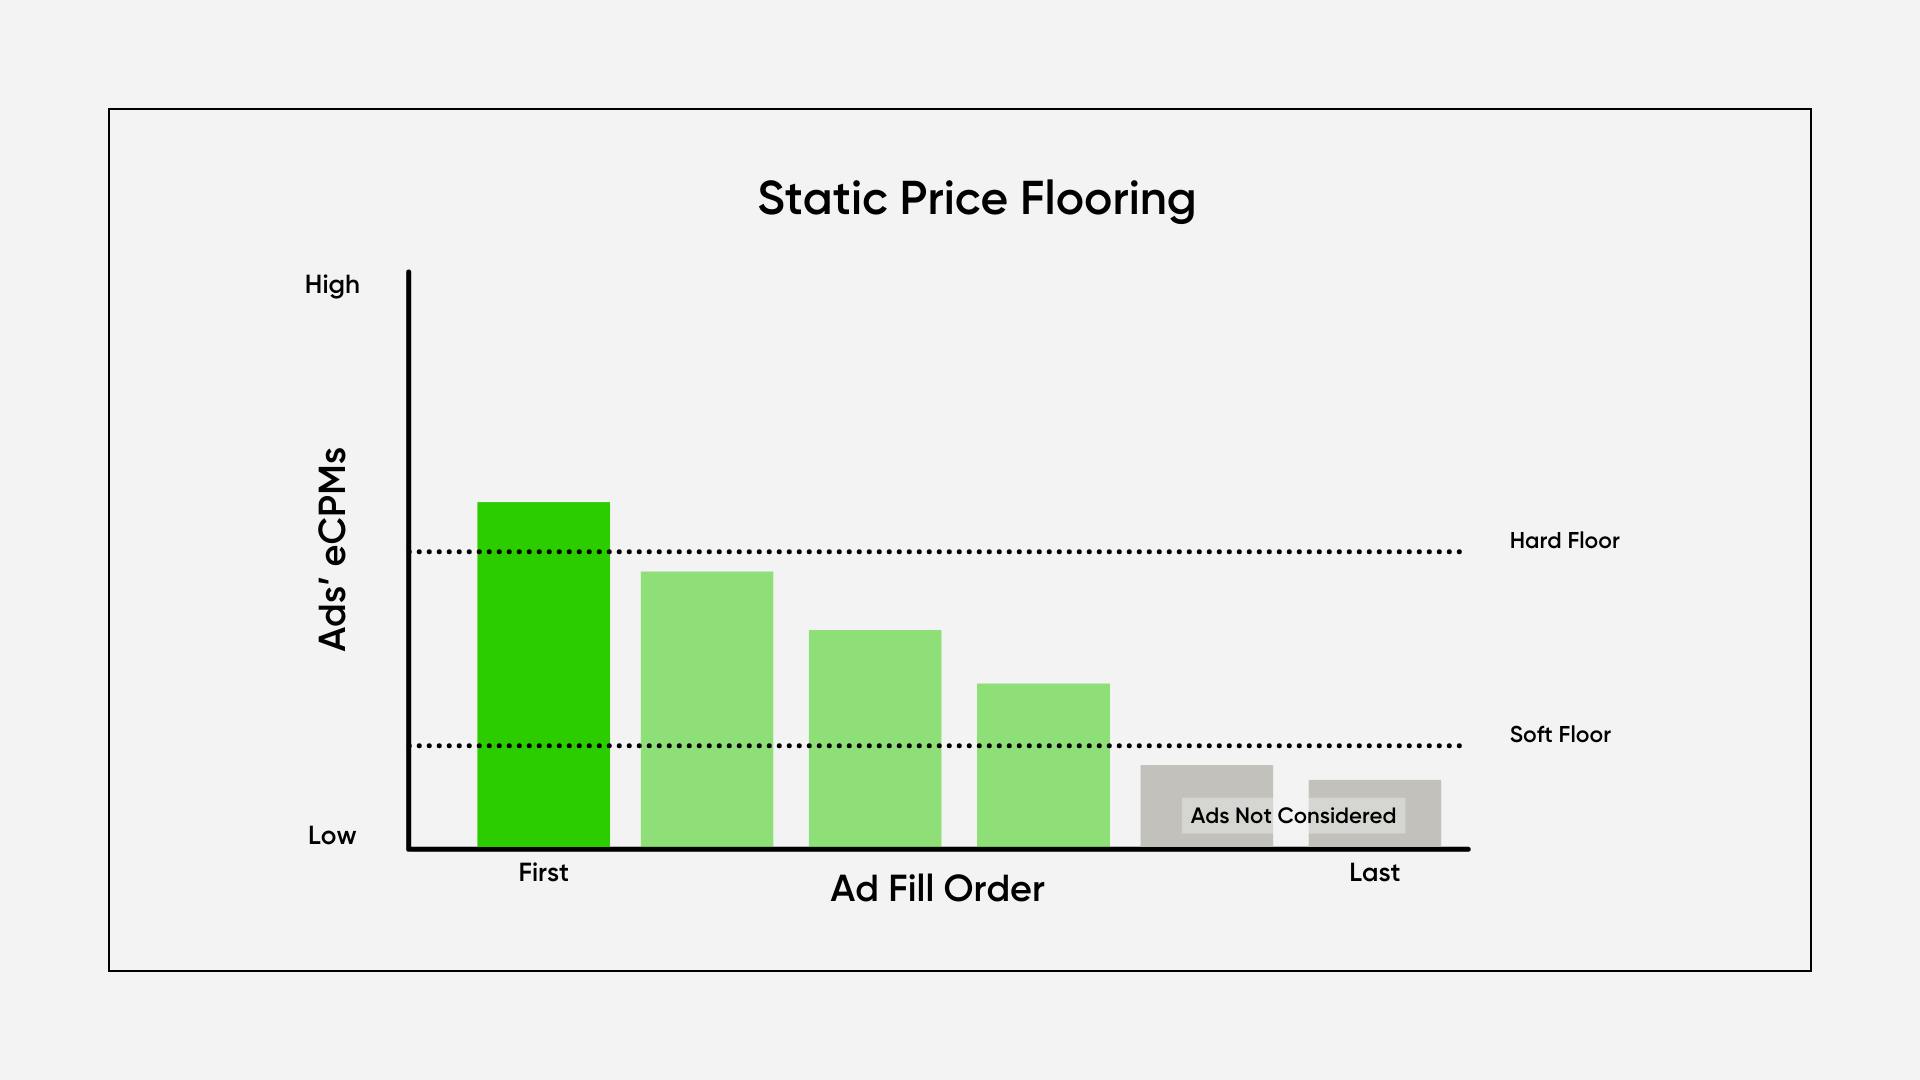 Static Price Flooring - Hard vs. Soft Floors